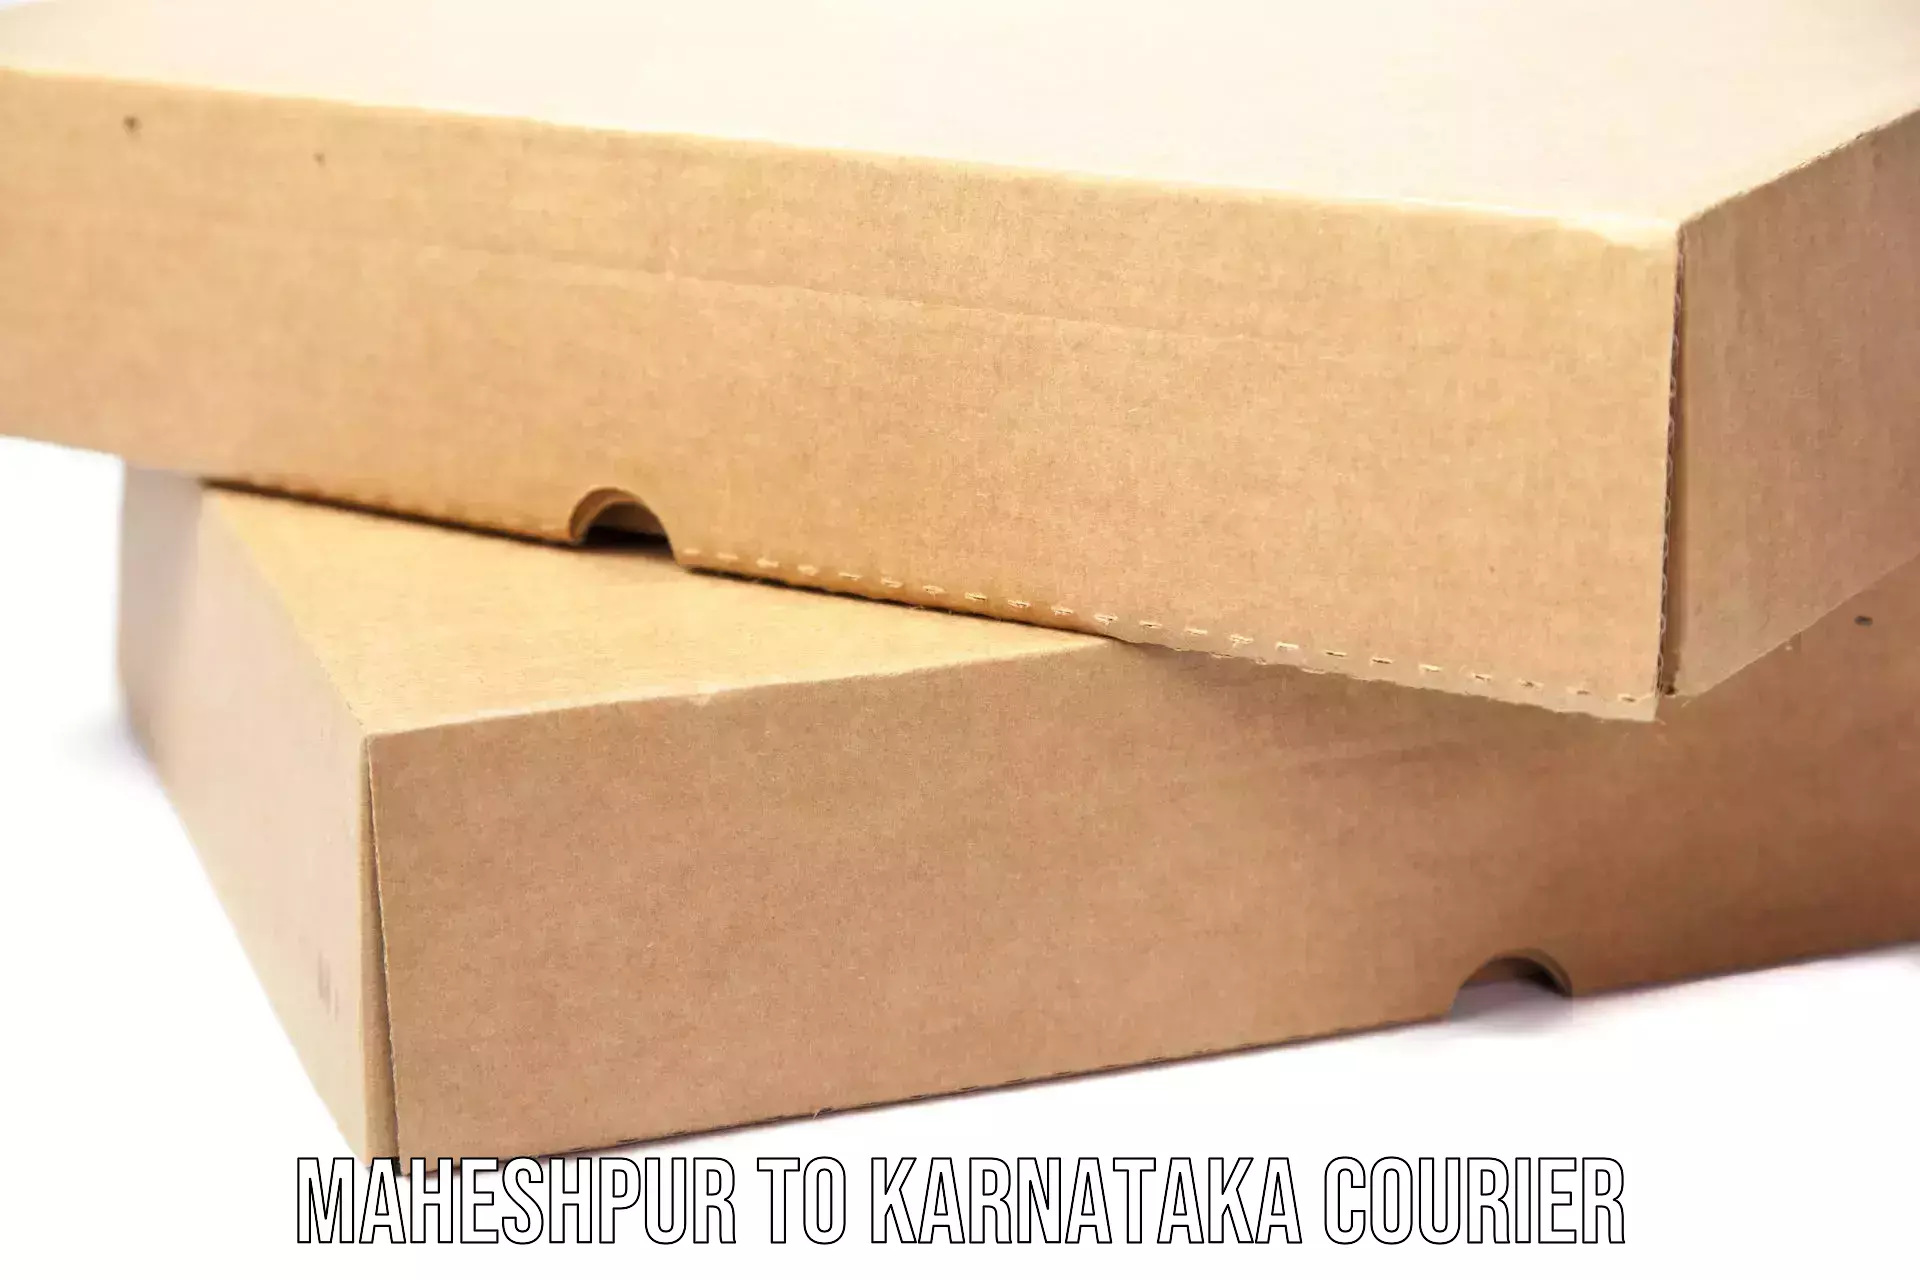 Courier service comparison Maheshpur to Karnataka